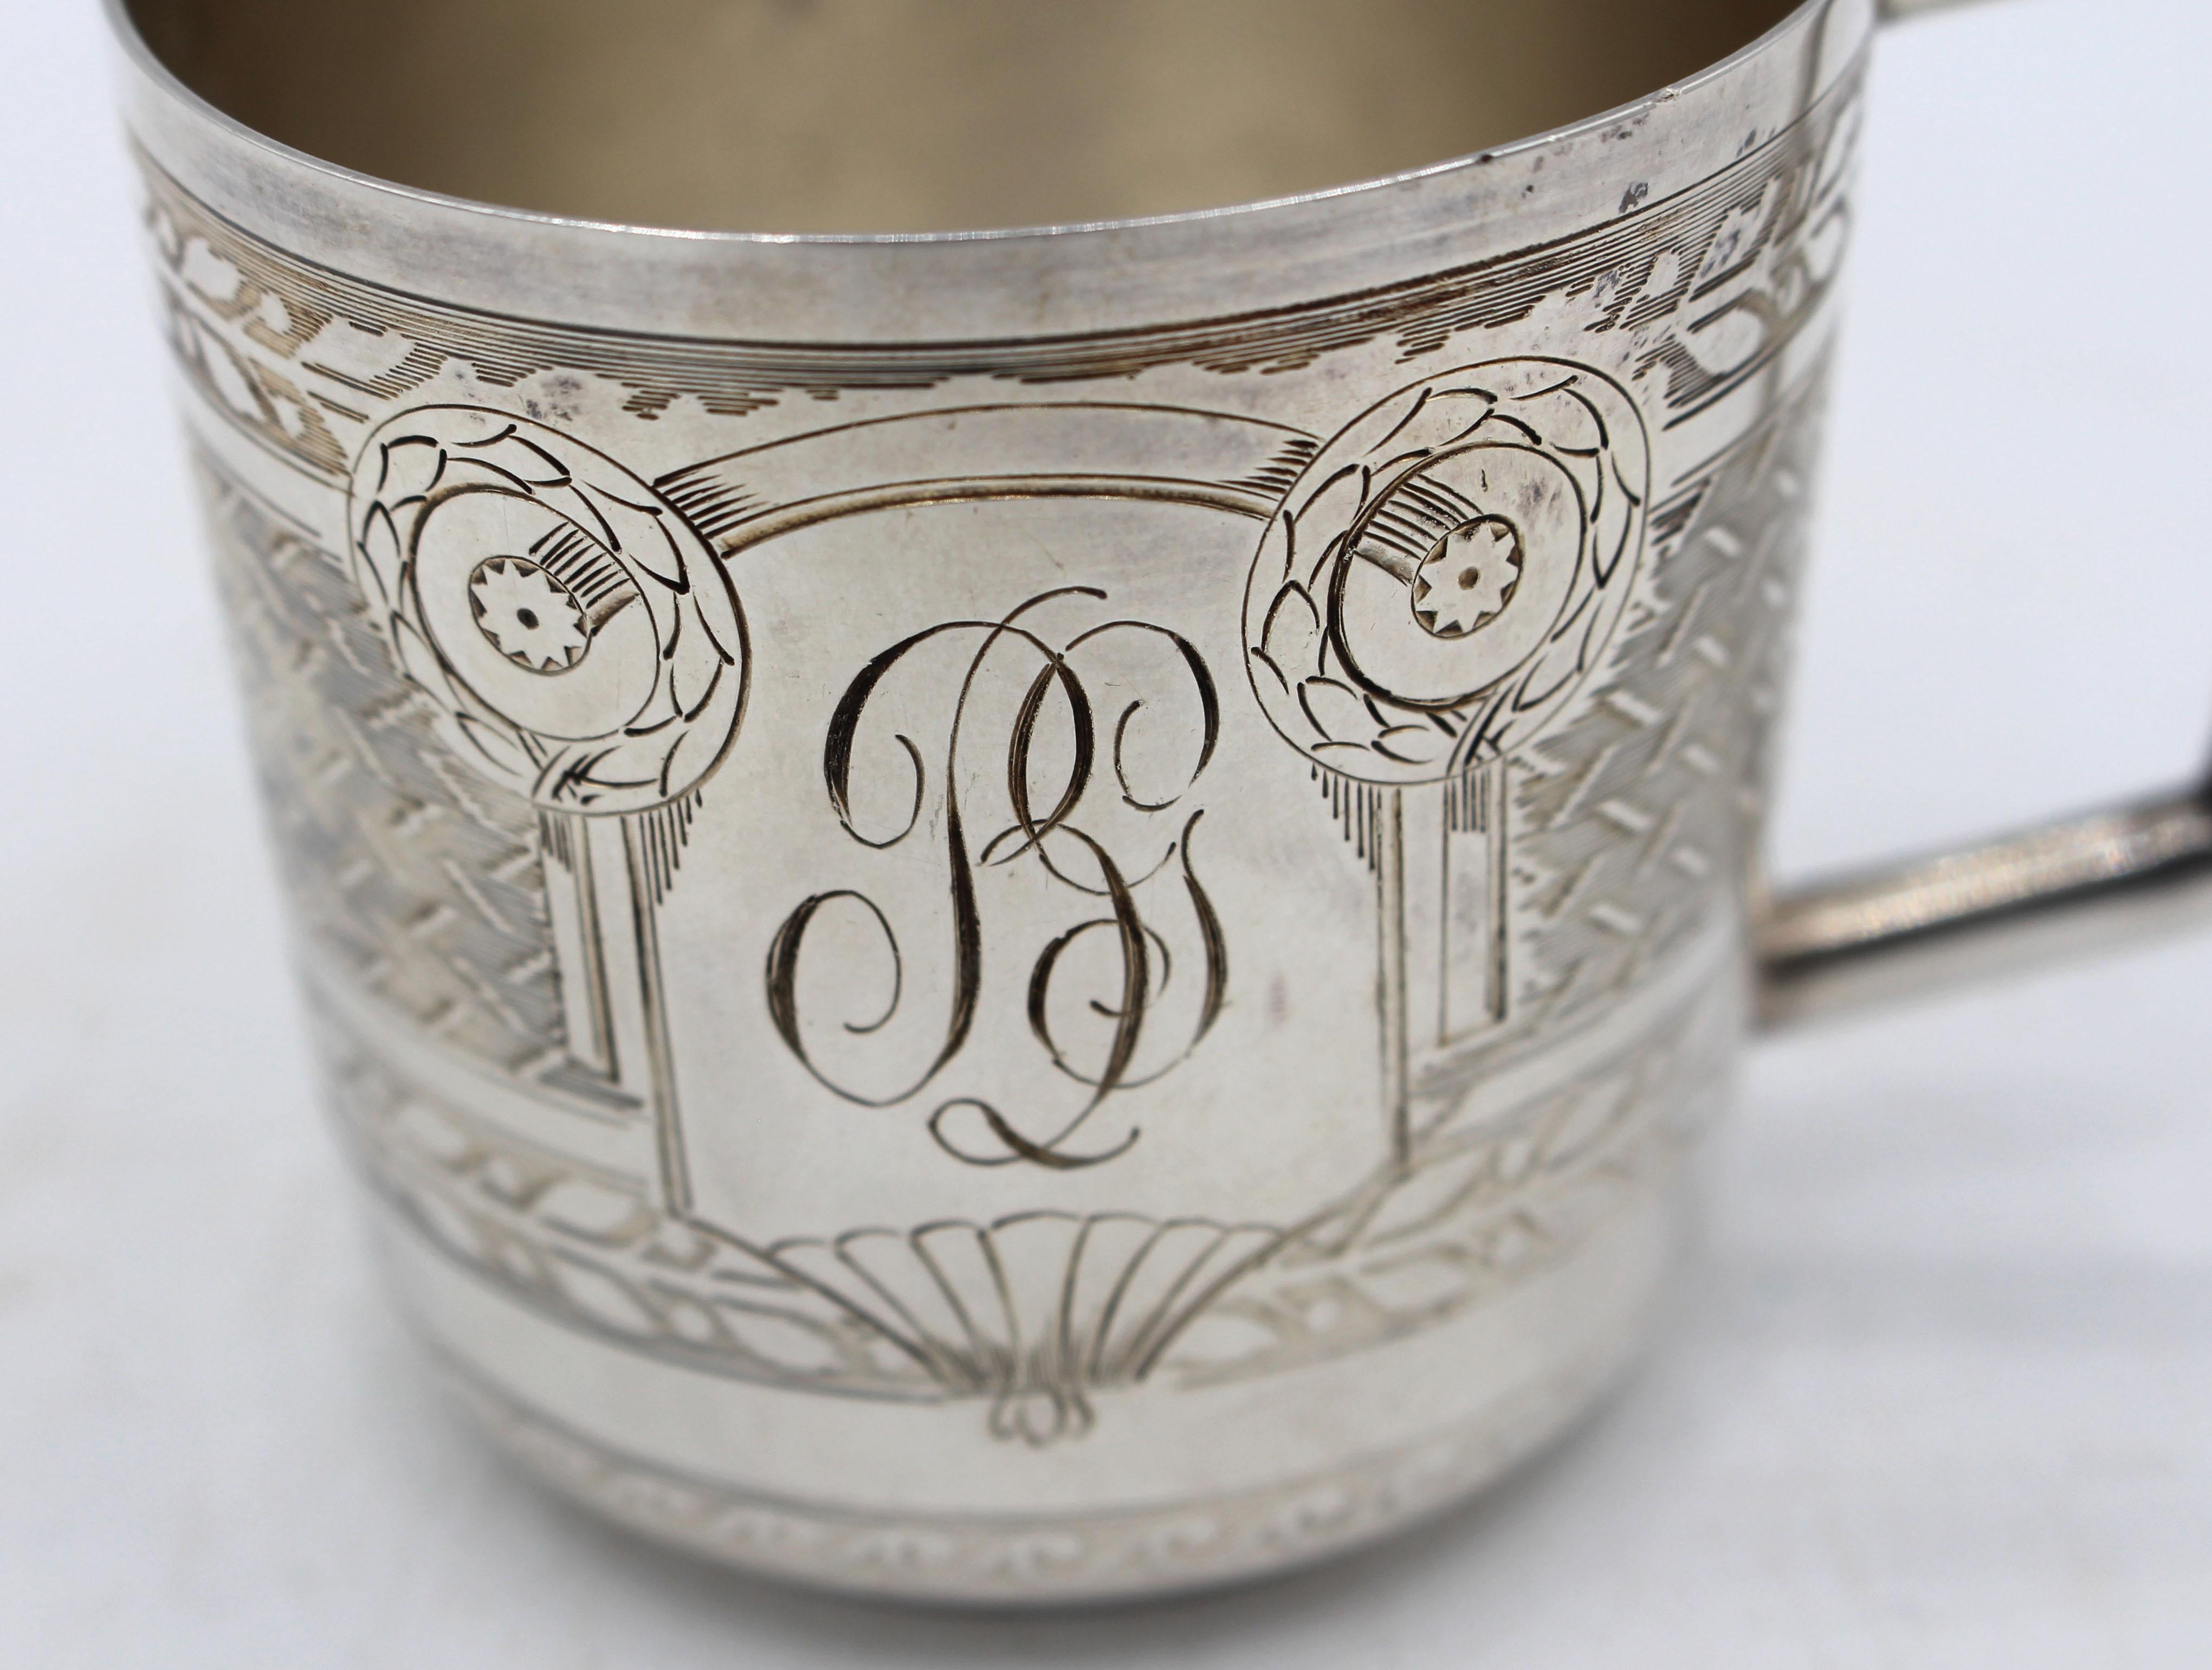 Late Victorian German 800 Standard Silver Cup & Saucer, circa 1900